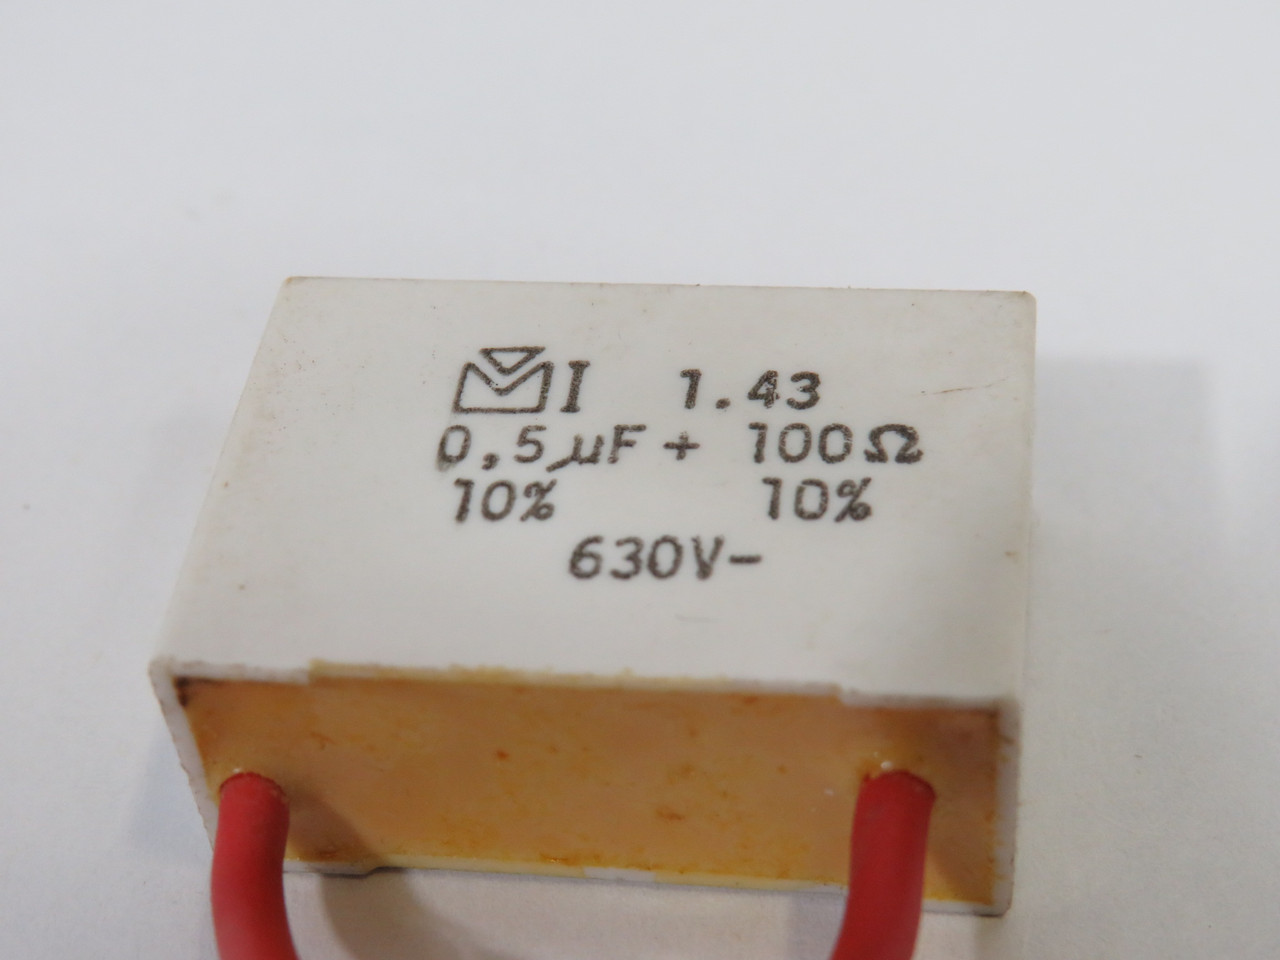 Generic 1.43 Capacitor 0.5uF +/- 10% 630V USED